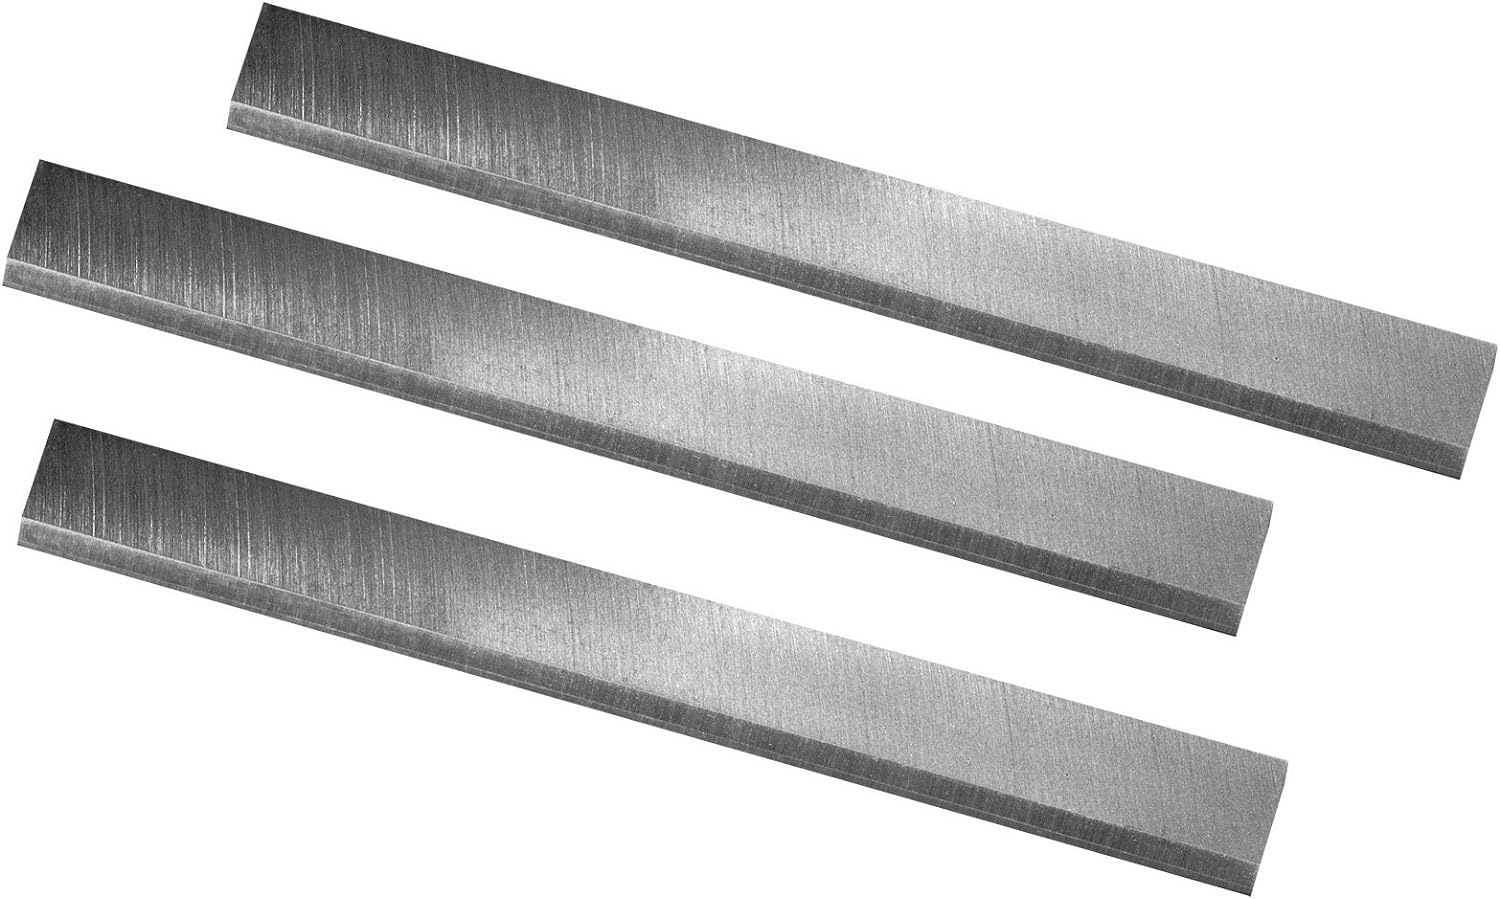 Powertec HSS 8-Inch Jointer Knives for Delta 37-365 X5 DJ20, HSS, Set of 3